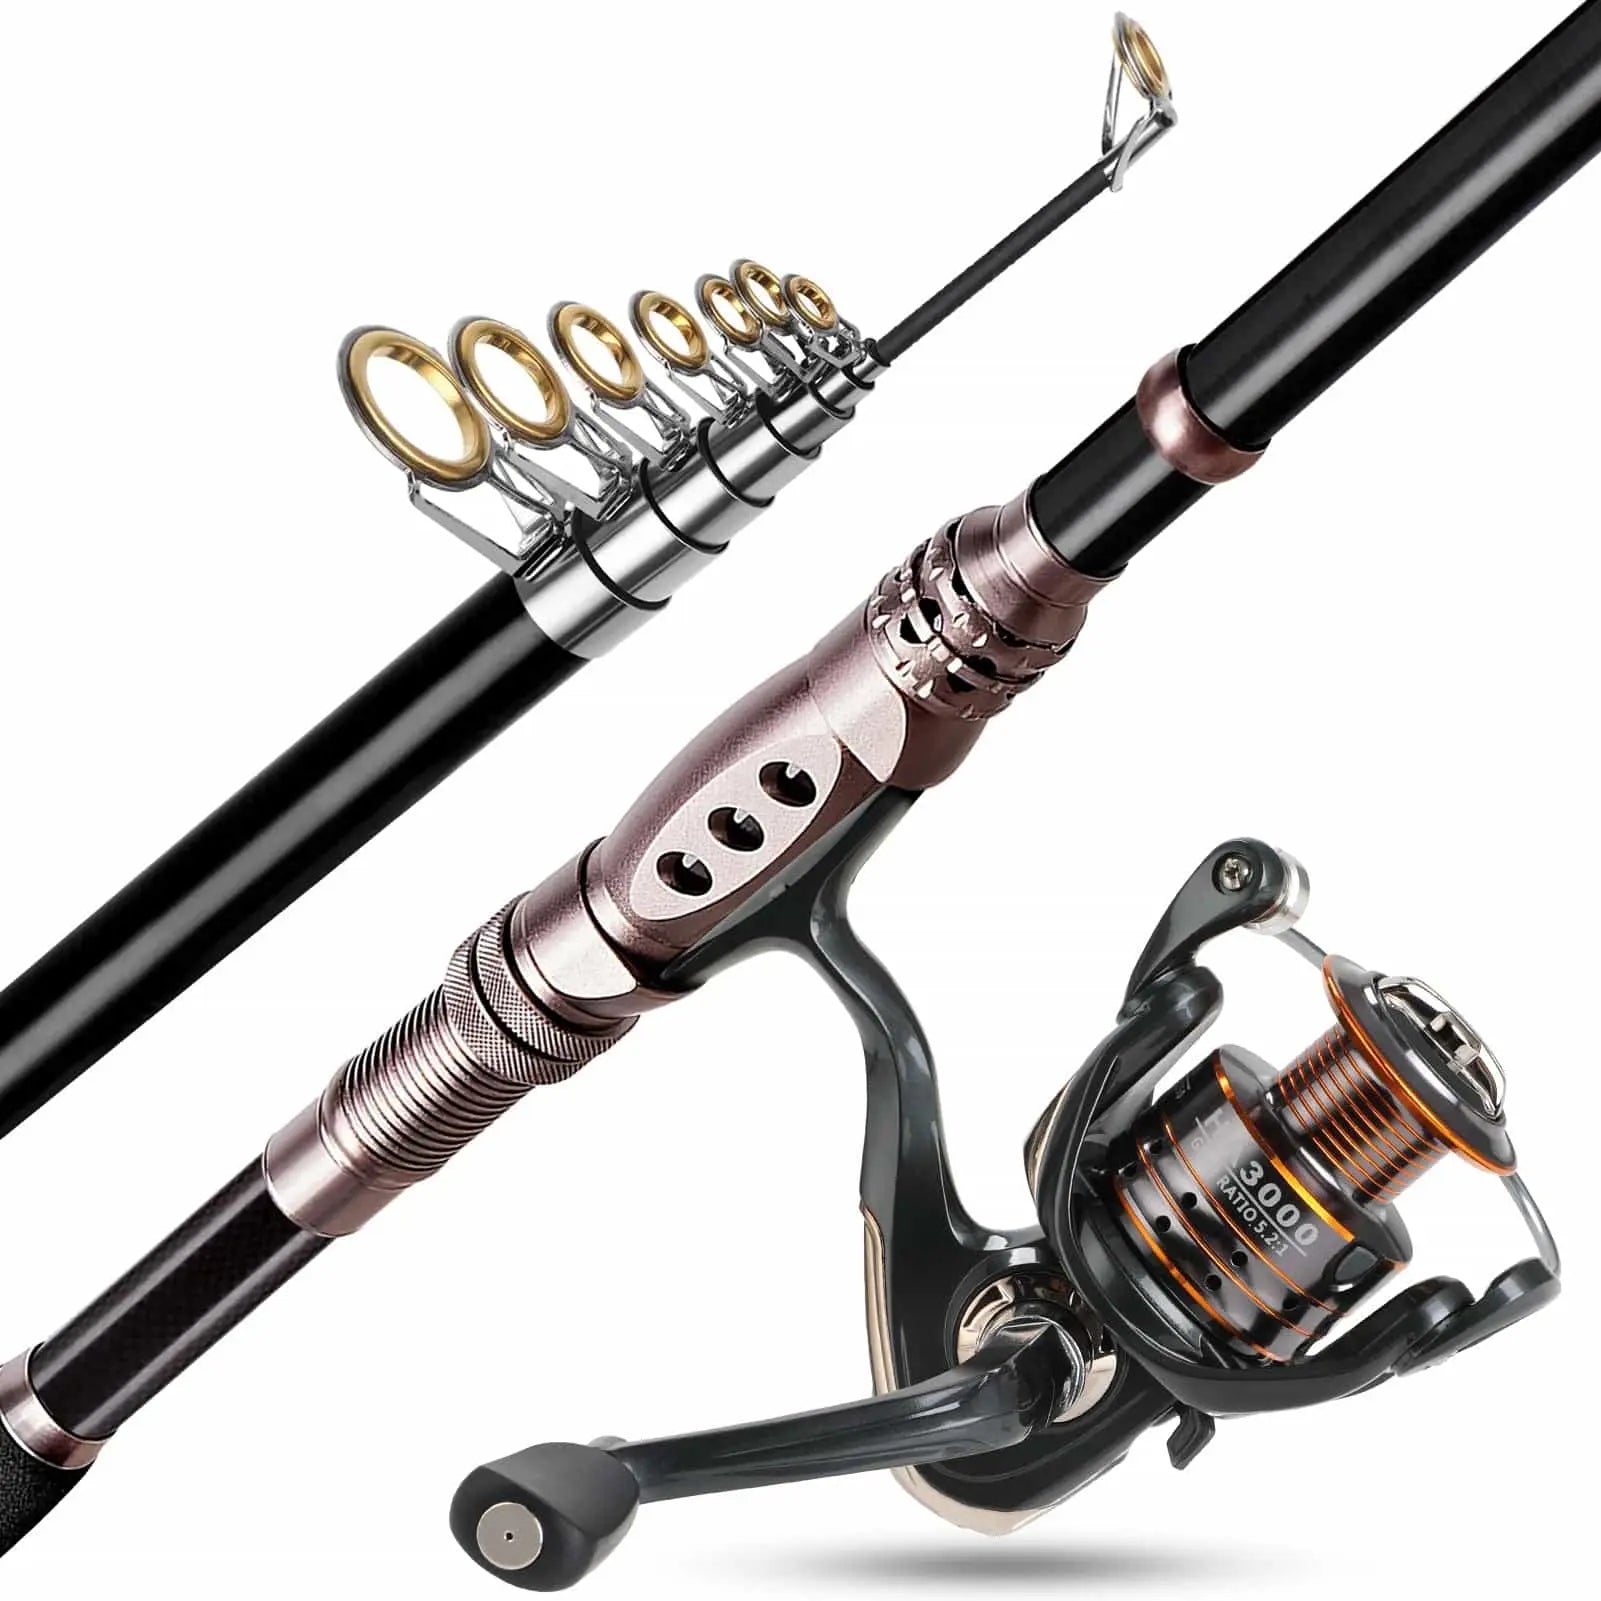 PLUSINNO Fishing Rod and Reel Combo, Travel UK